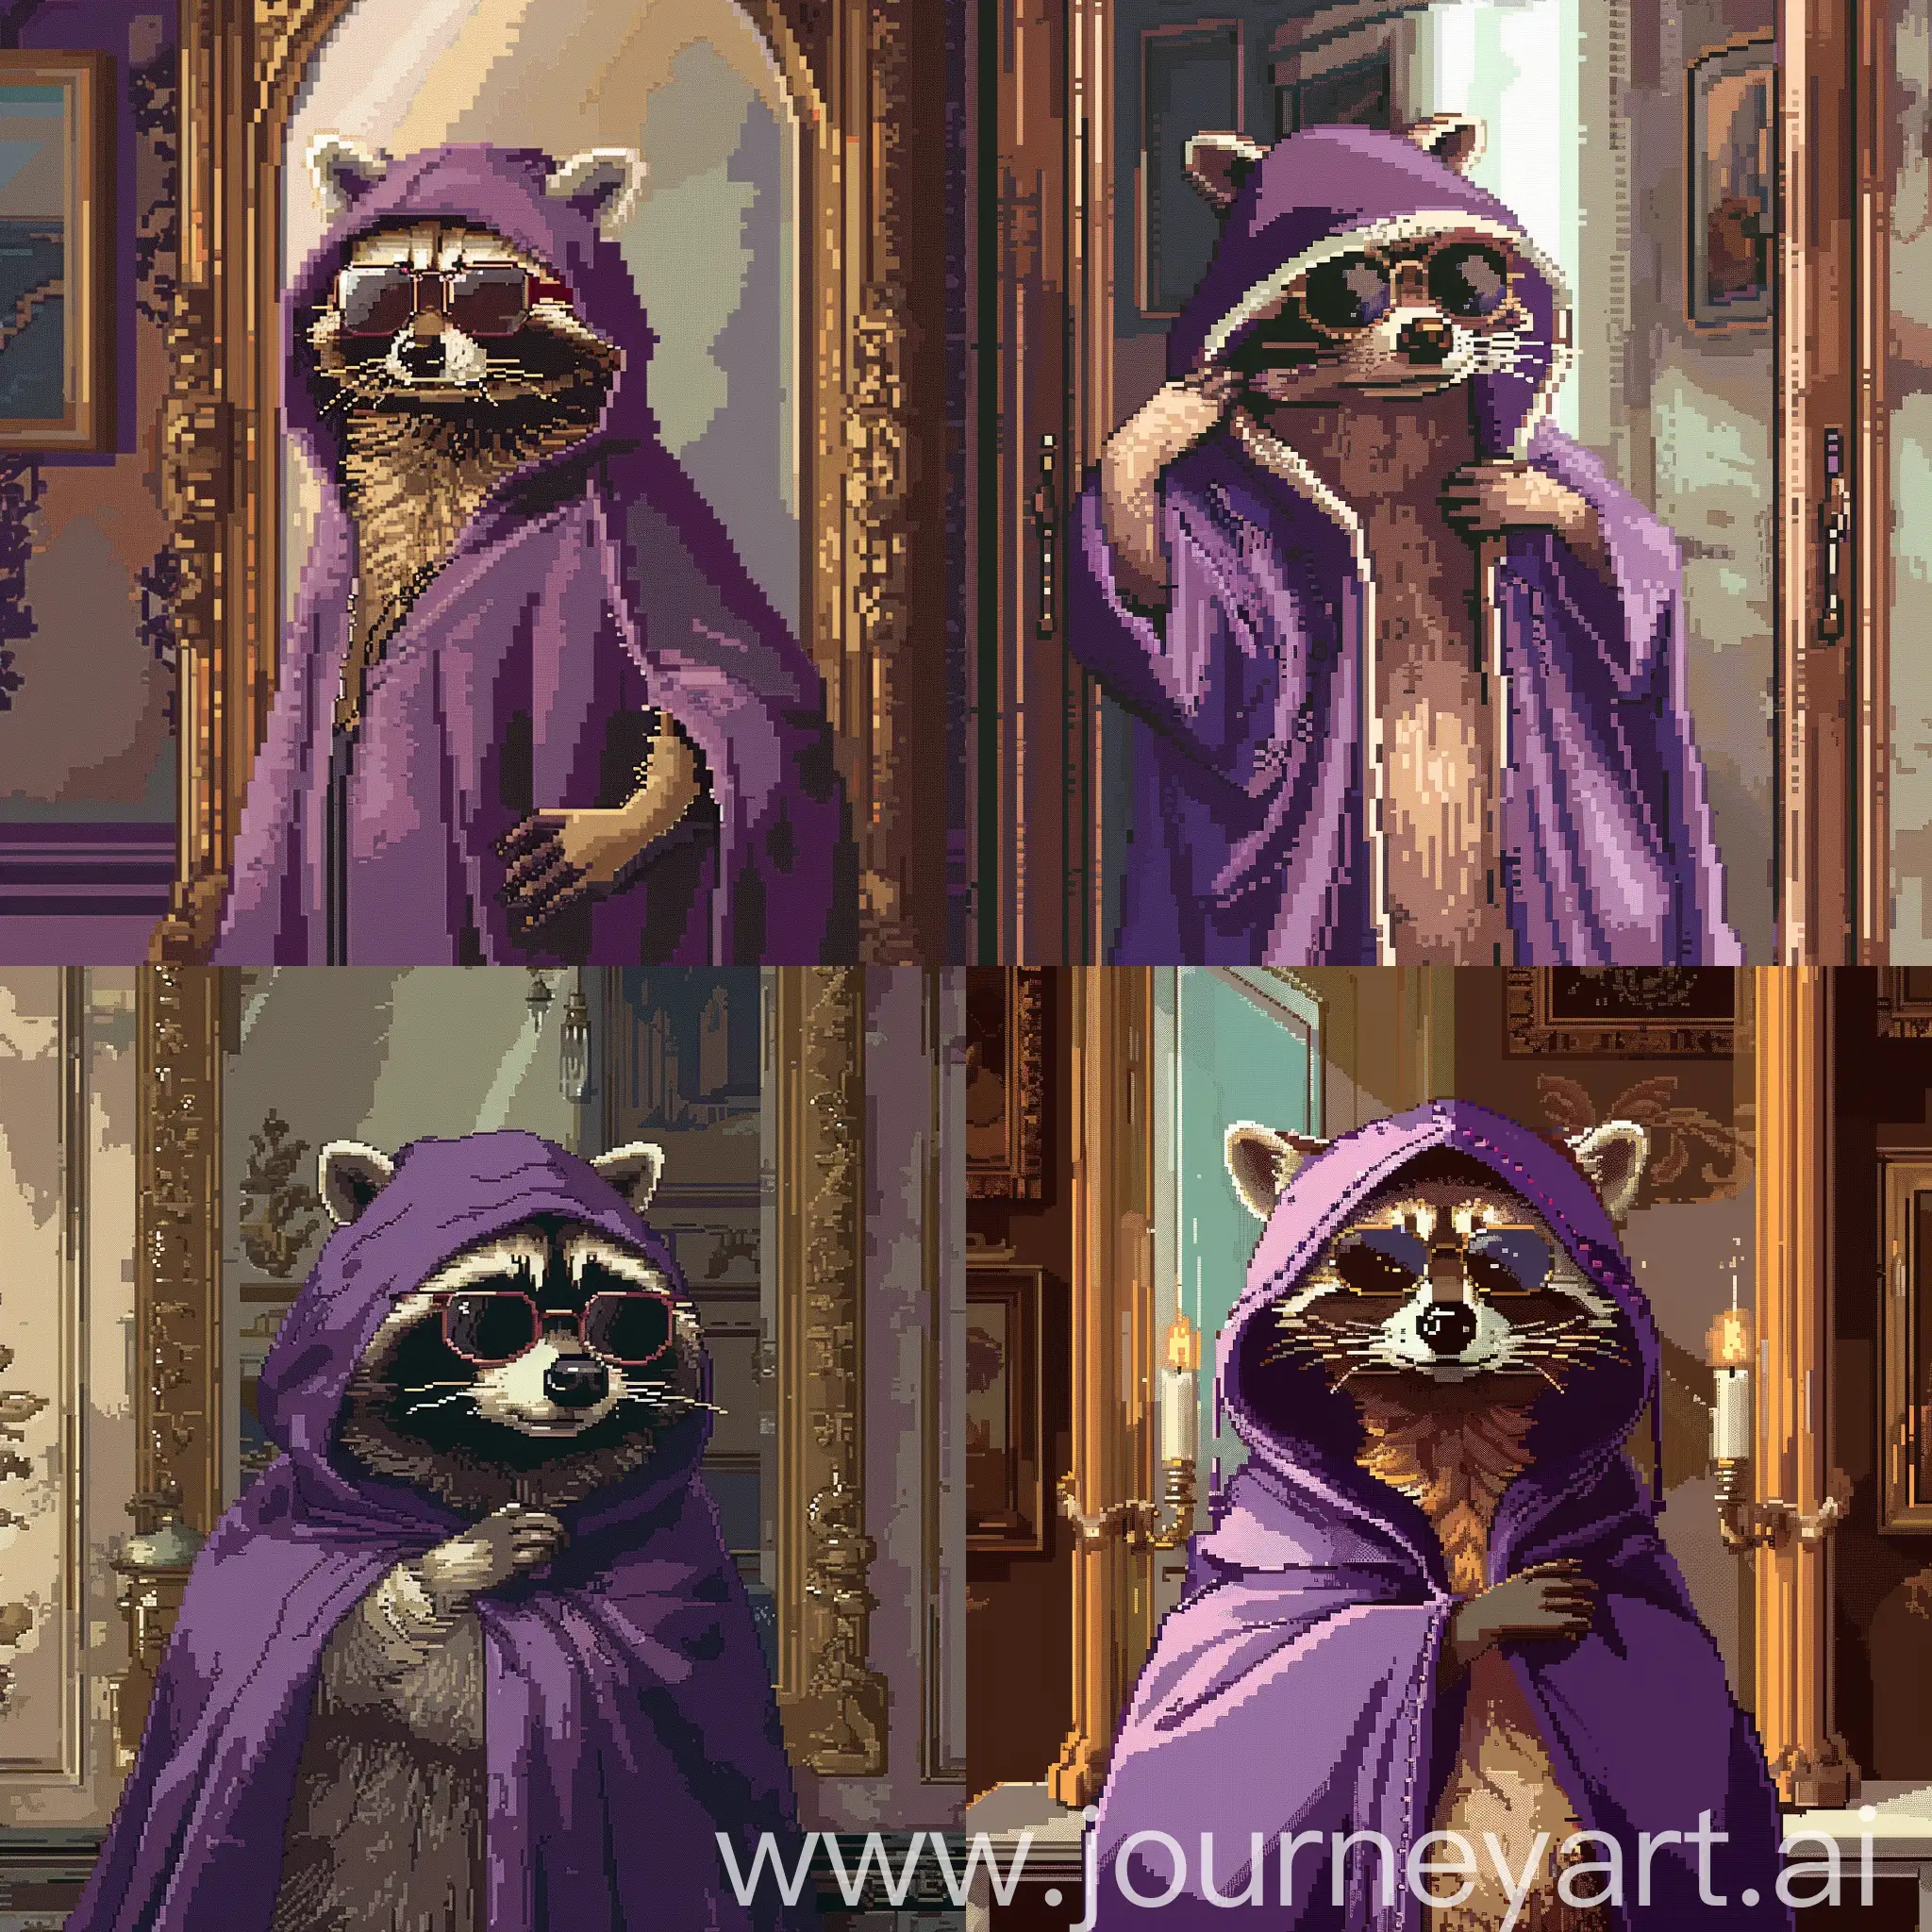 Stylish-Raccoon-in-Purple-Cloak-and-Sunglasses-Admiring-Pixel-Art-Mirror